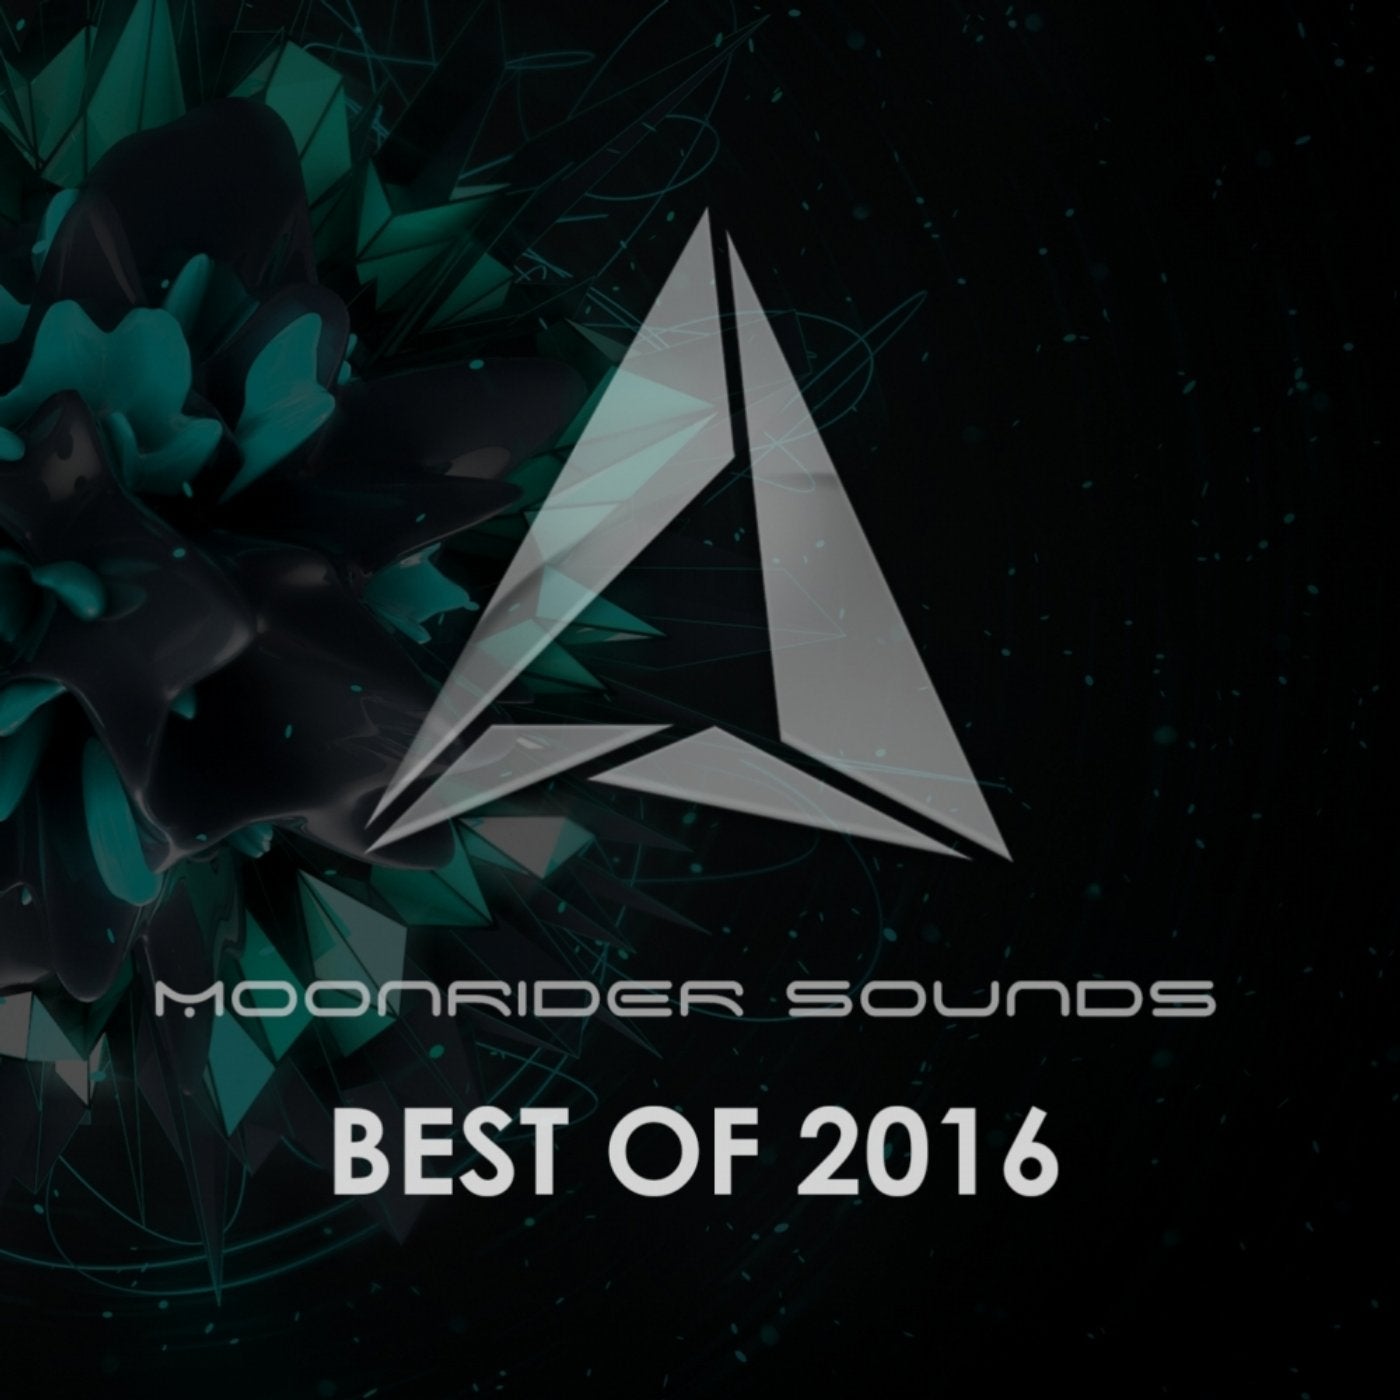 Moonrider Sounds Best Of 2016